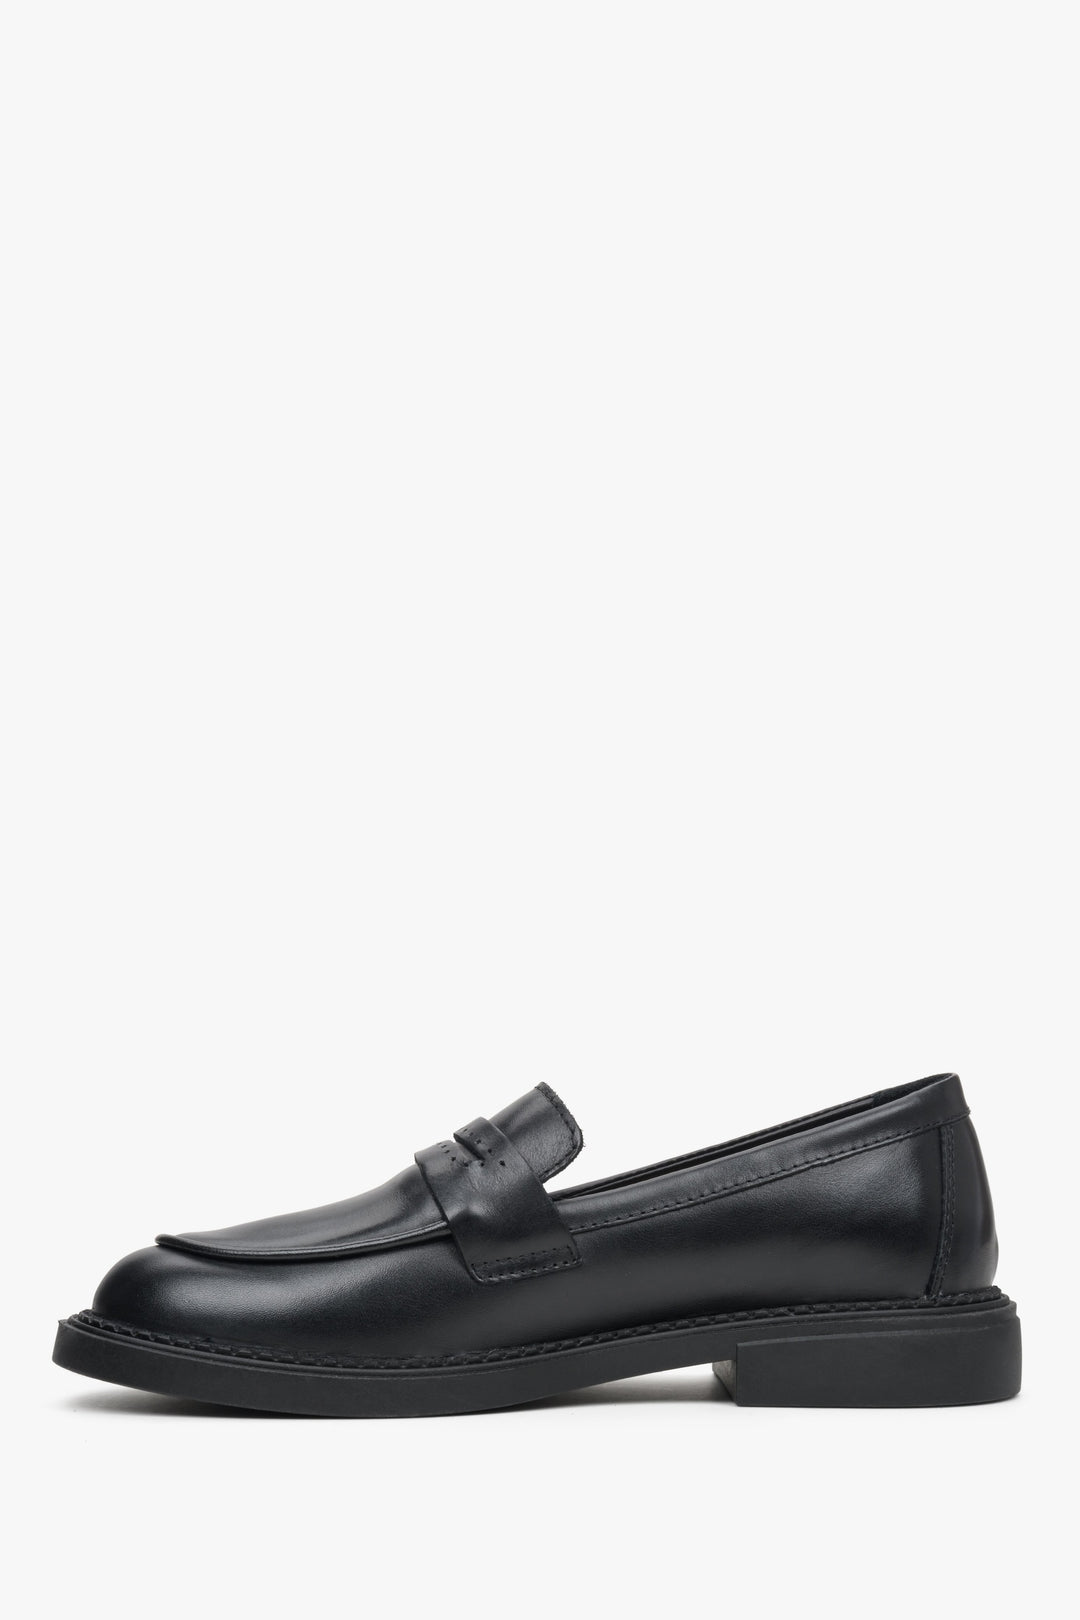 Women's black loafers by Estro - shoe profile.